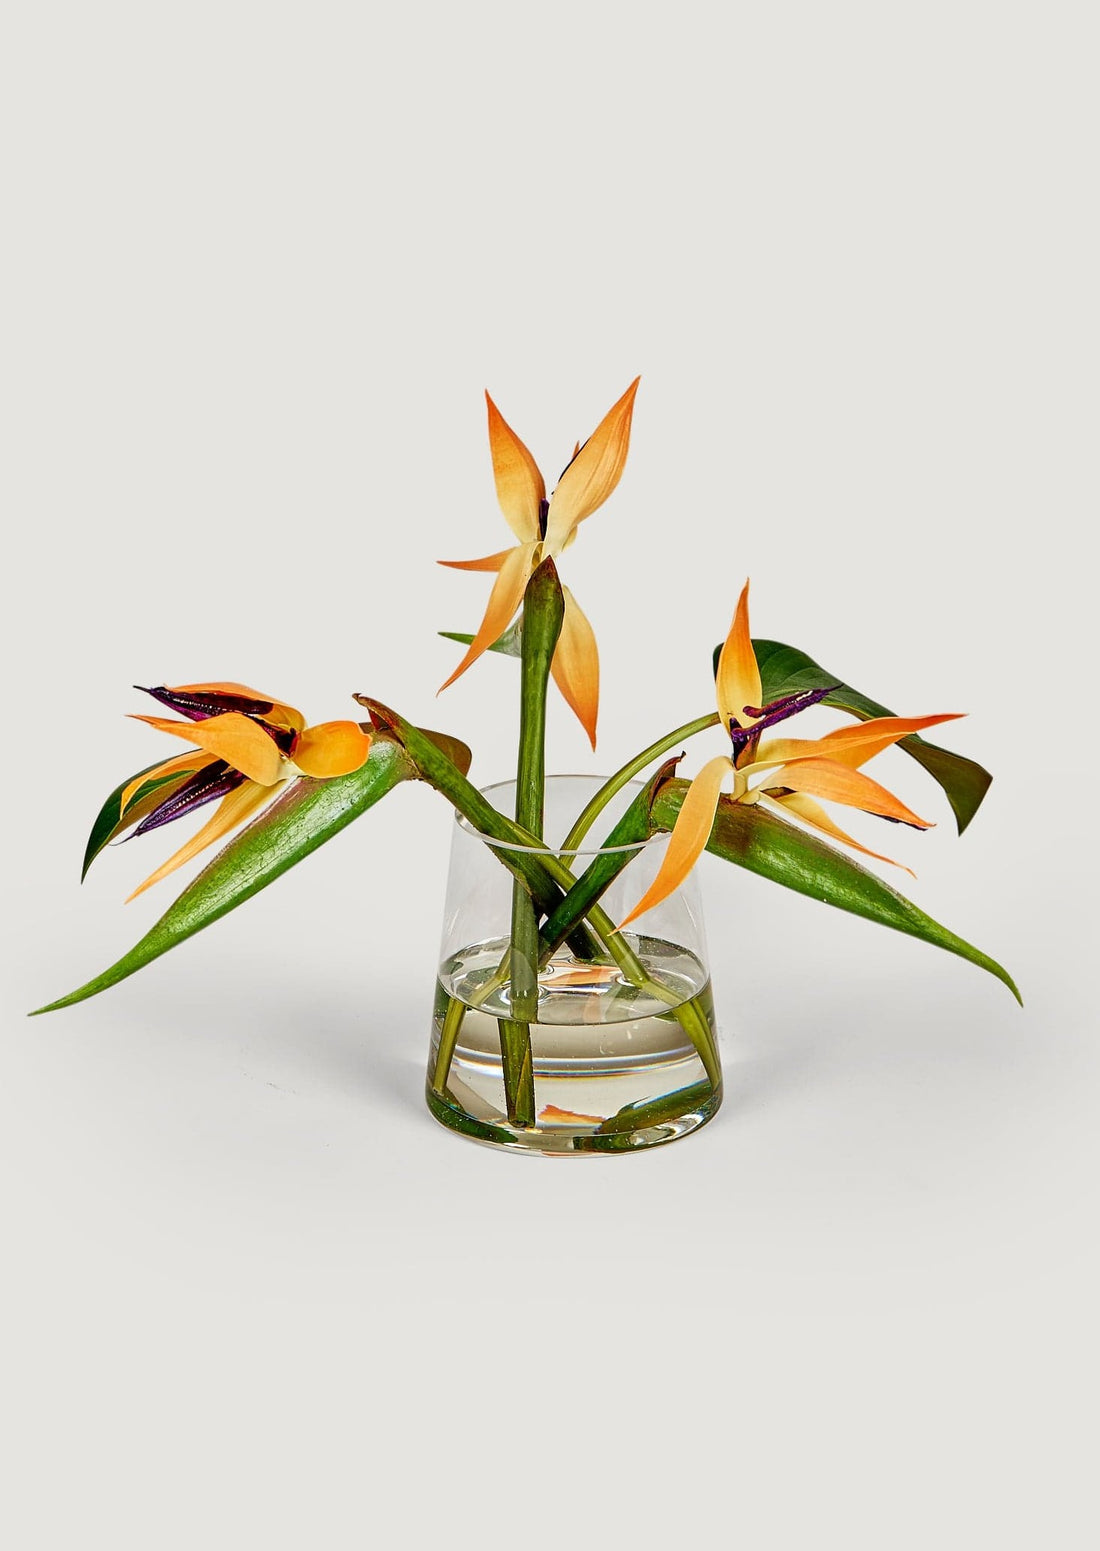 Afloral Faux Arrangements Bird of Paradise Flowers in Glass Vase